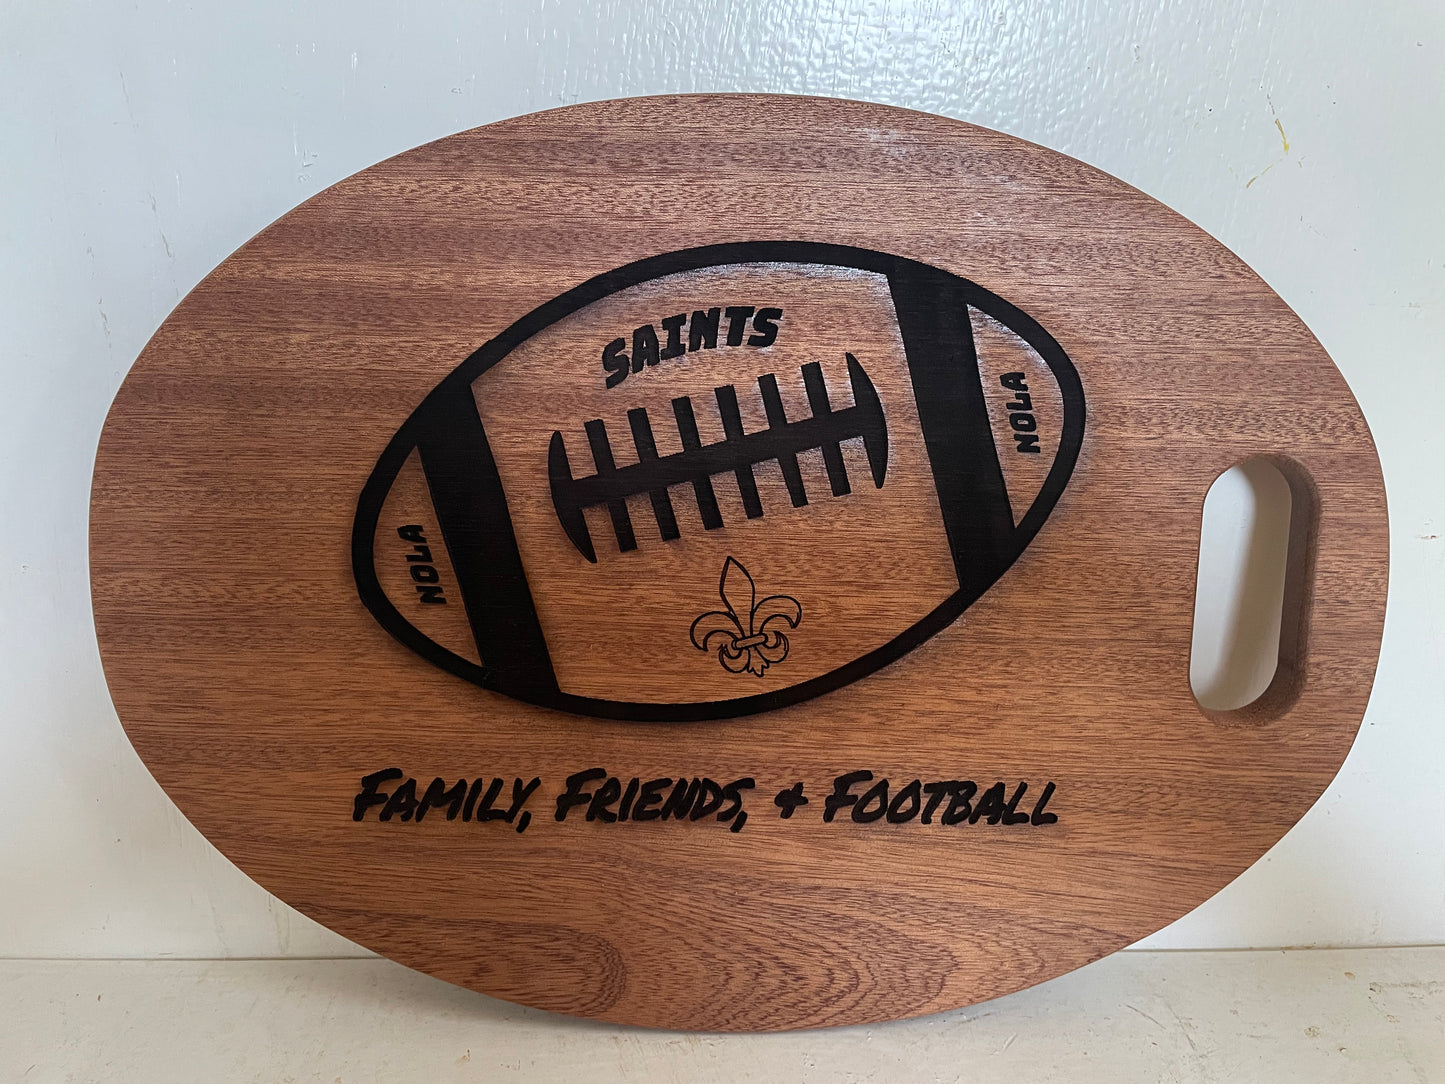 Round Medium Brown “Friends, Family & Football” Team Cutting Board